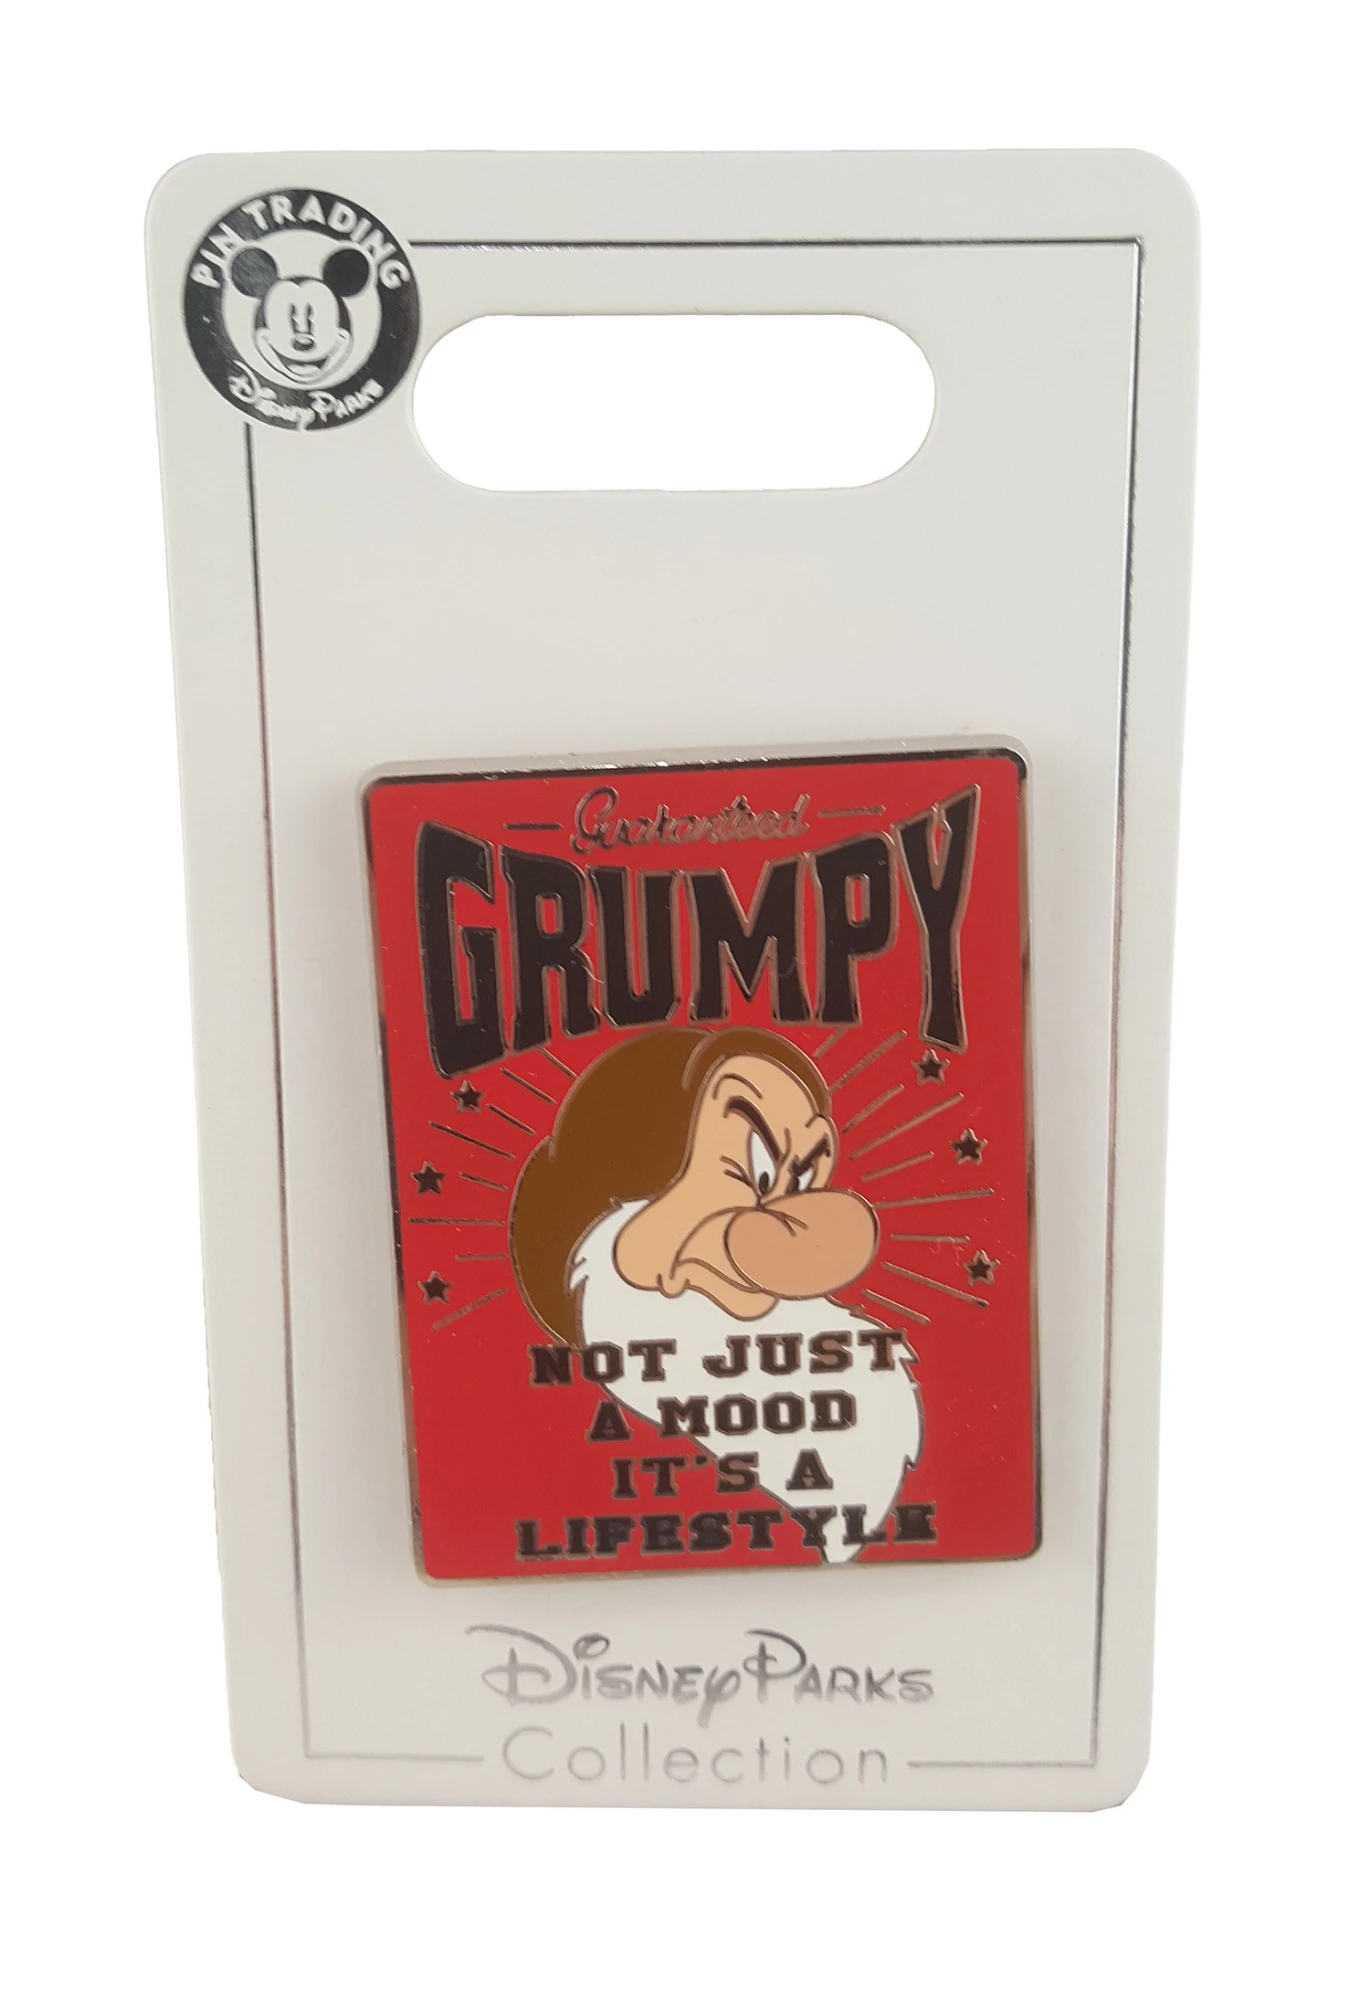 item Disney Pin - Guaranteed Grumpy - It's a Lifestyle 124285w